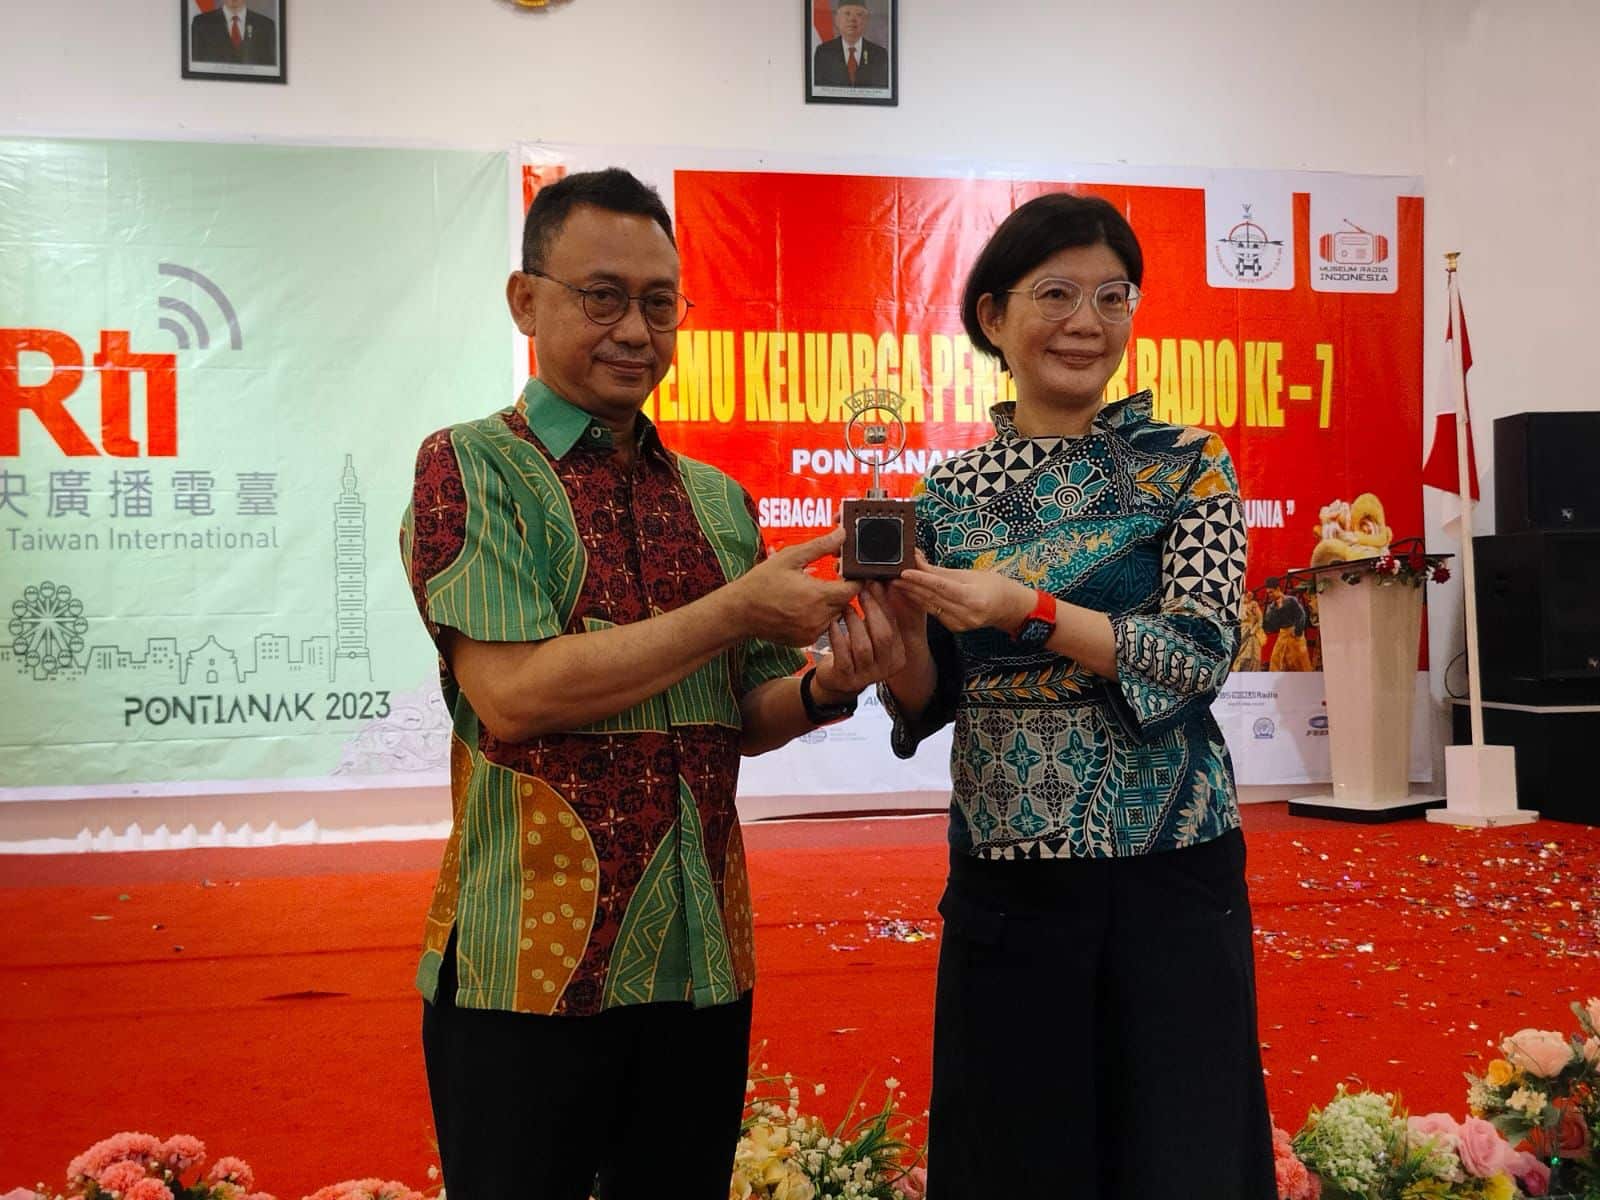 Wali Kota Pontianak, Edi Rusdi Kamtono menghadiri pembukaan TKPR ke-7 tahun 2023 di Hotel 95 Pontianak, Jumat (02/06/2023). (Foto: Indri)